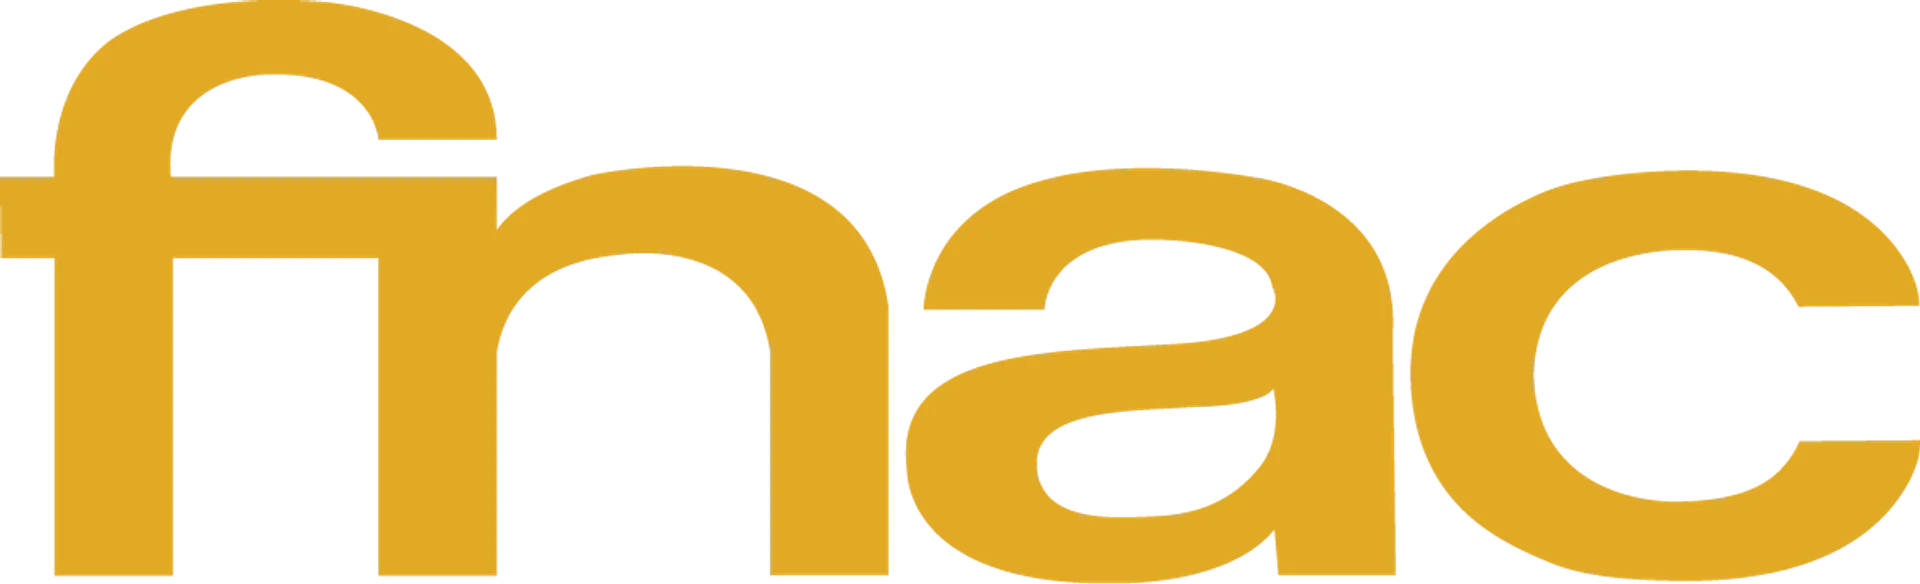 FNAC logo